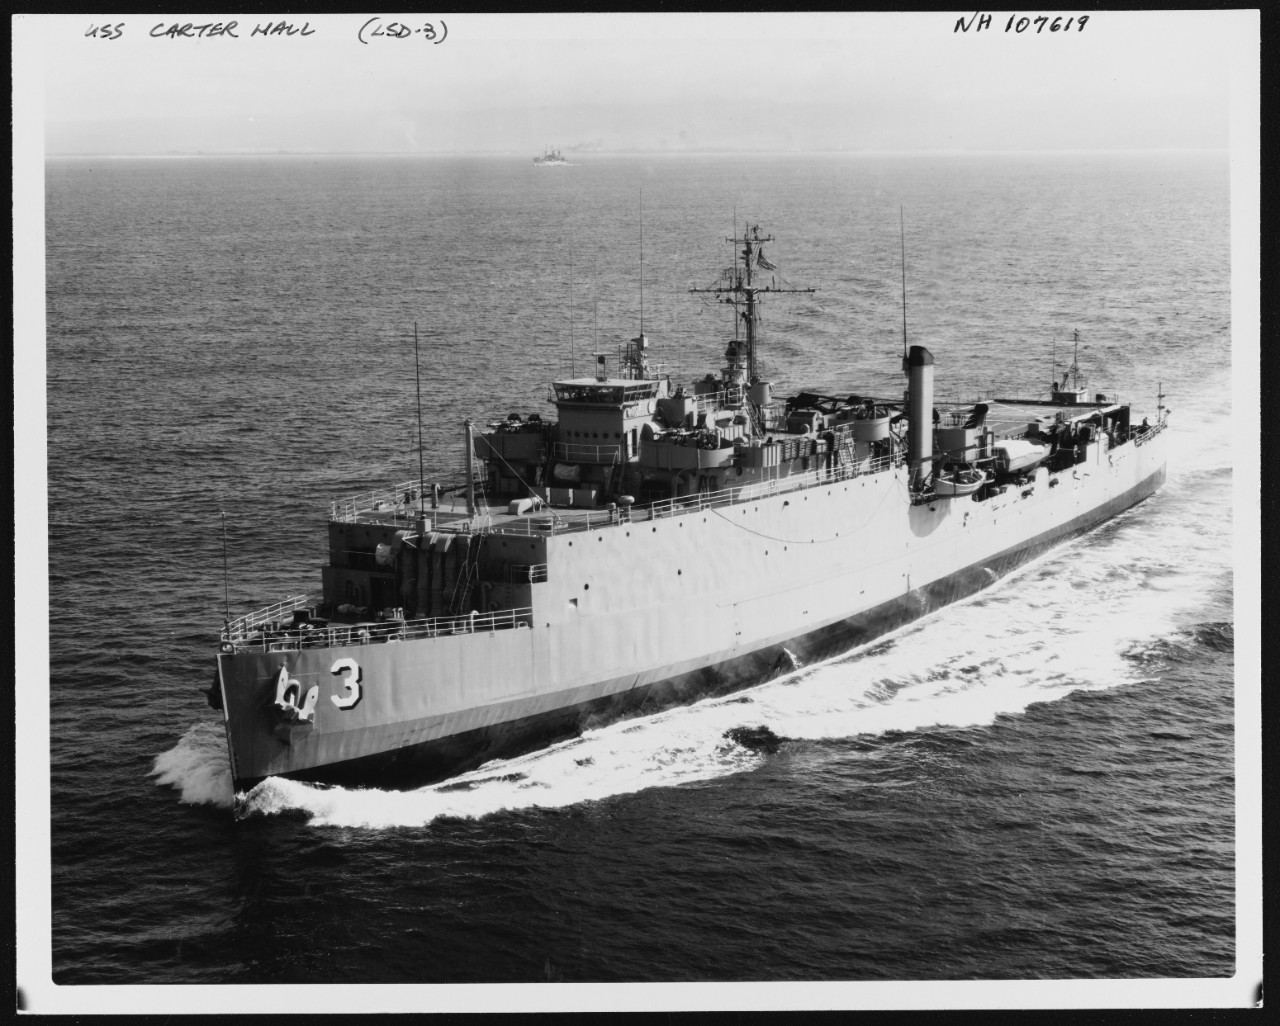 Photo #: NH 107619  USS Carter Hall